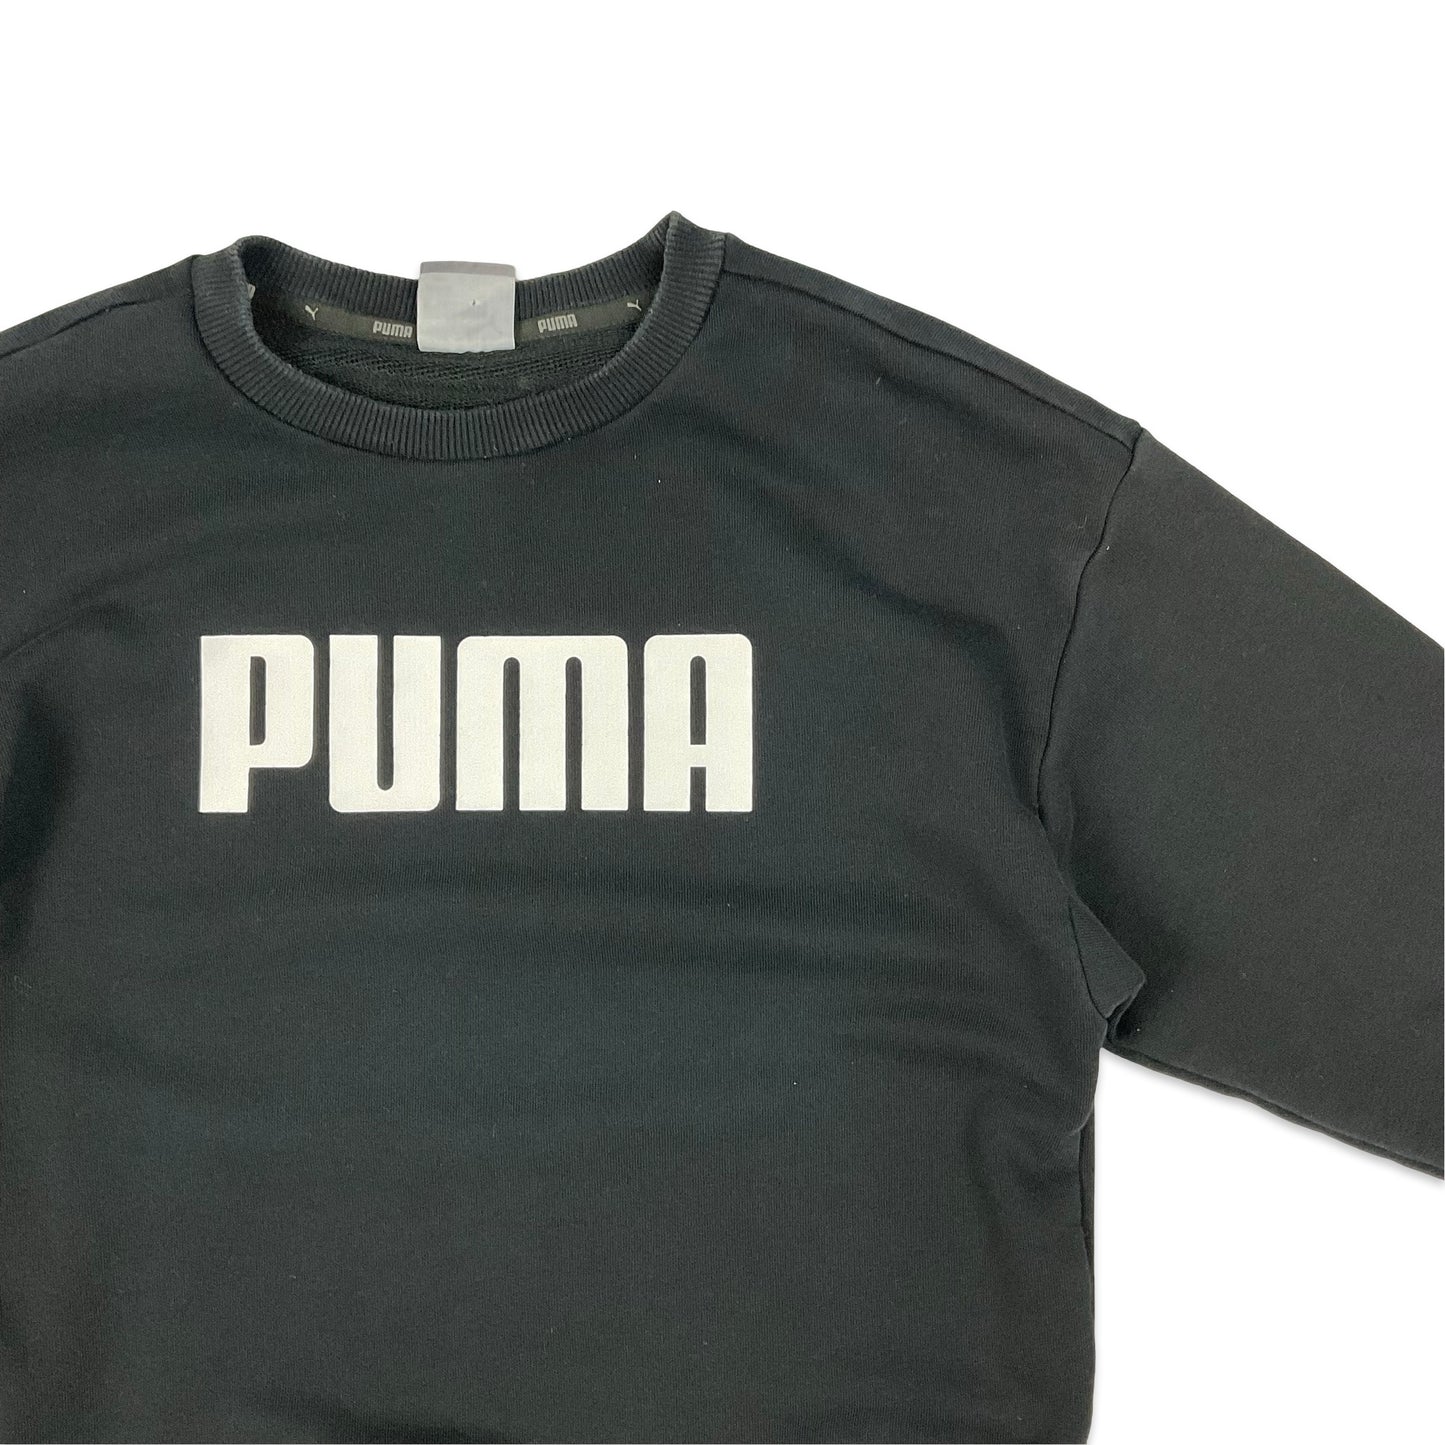 Puma Black Spell Out Crew Neck Sweatshirt 14 16